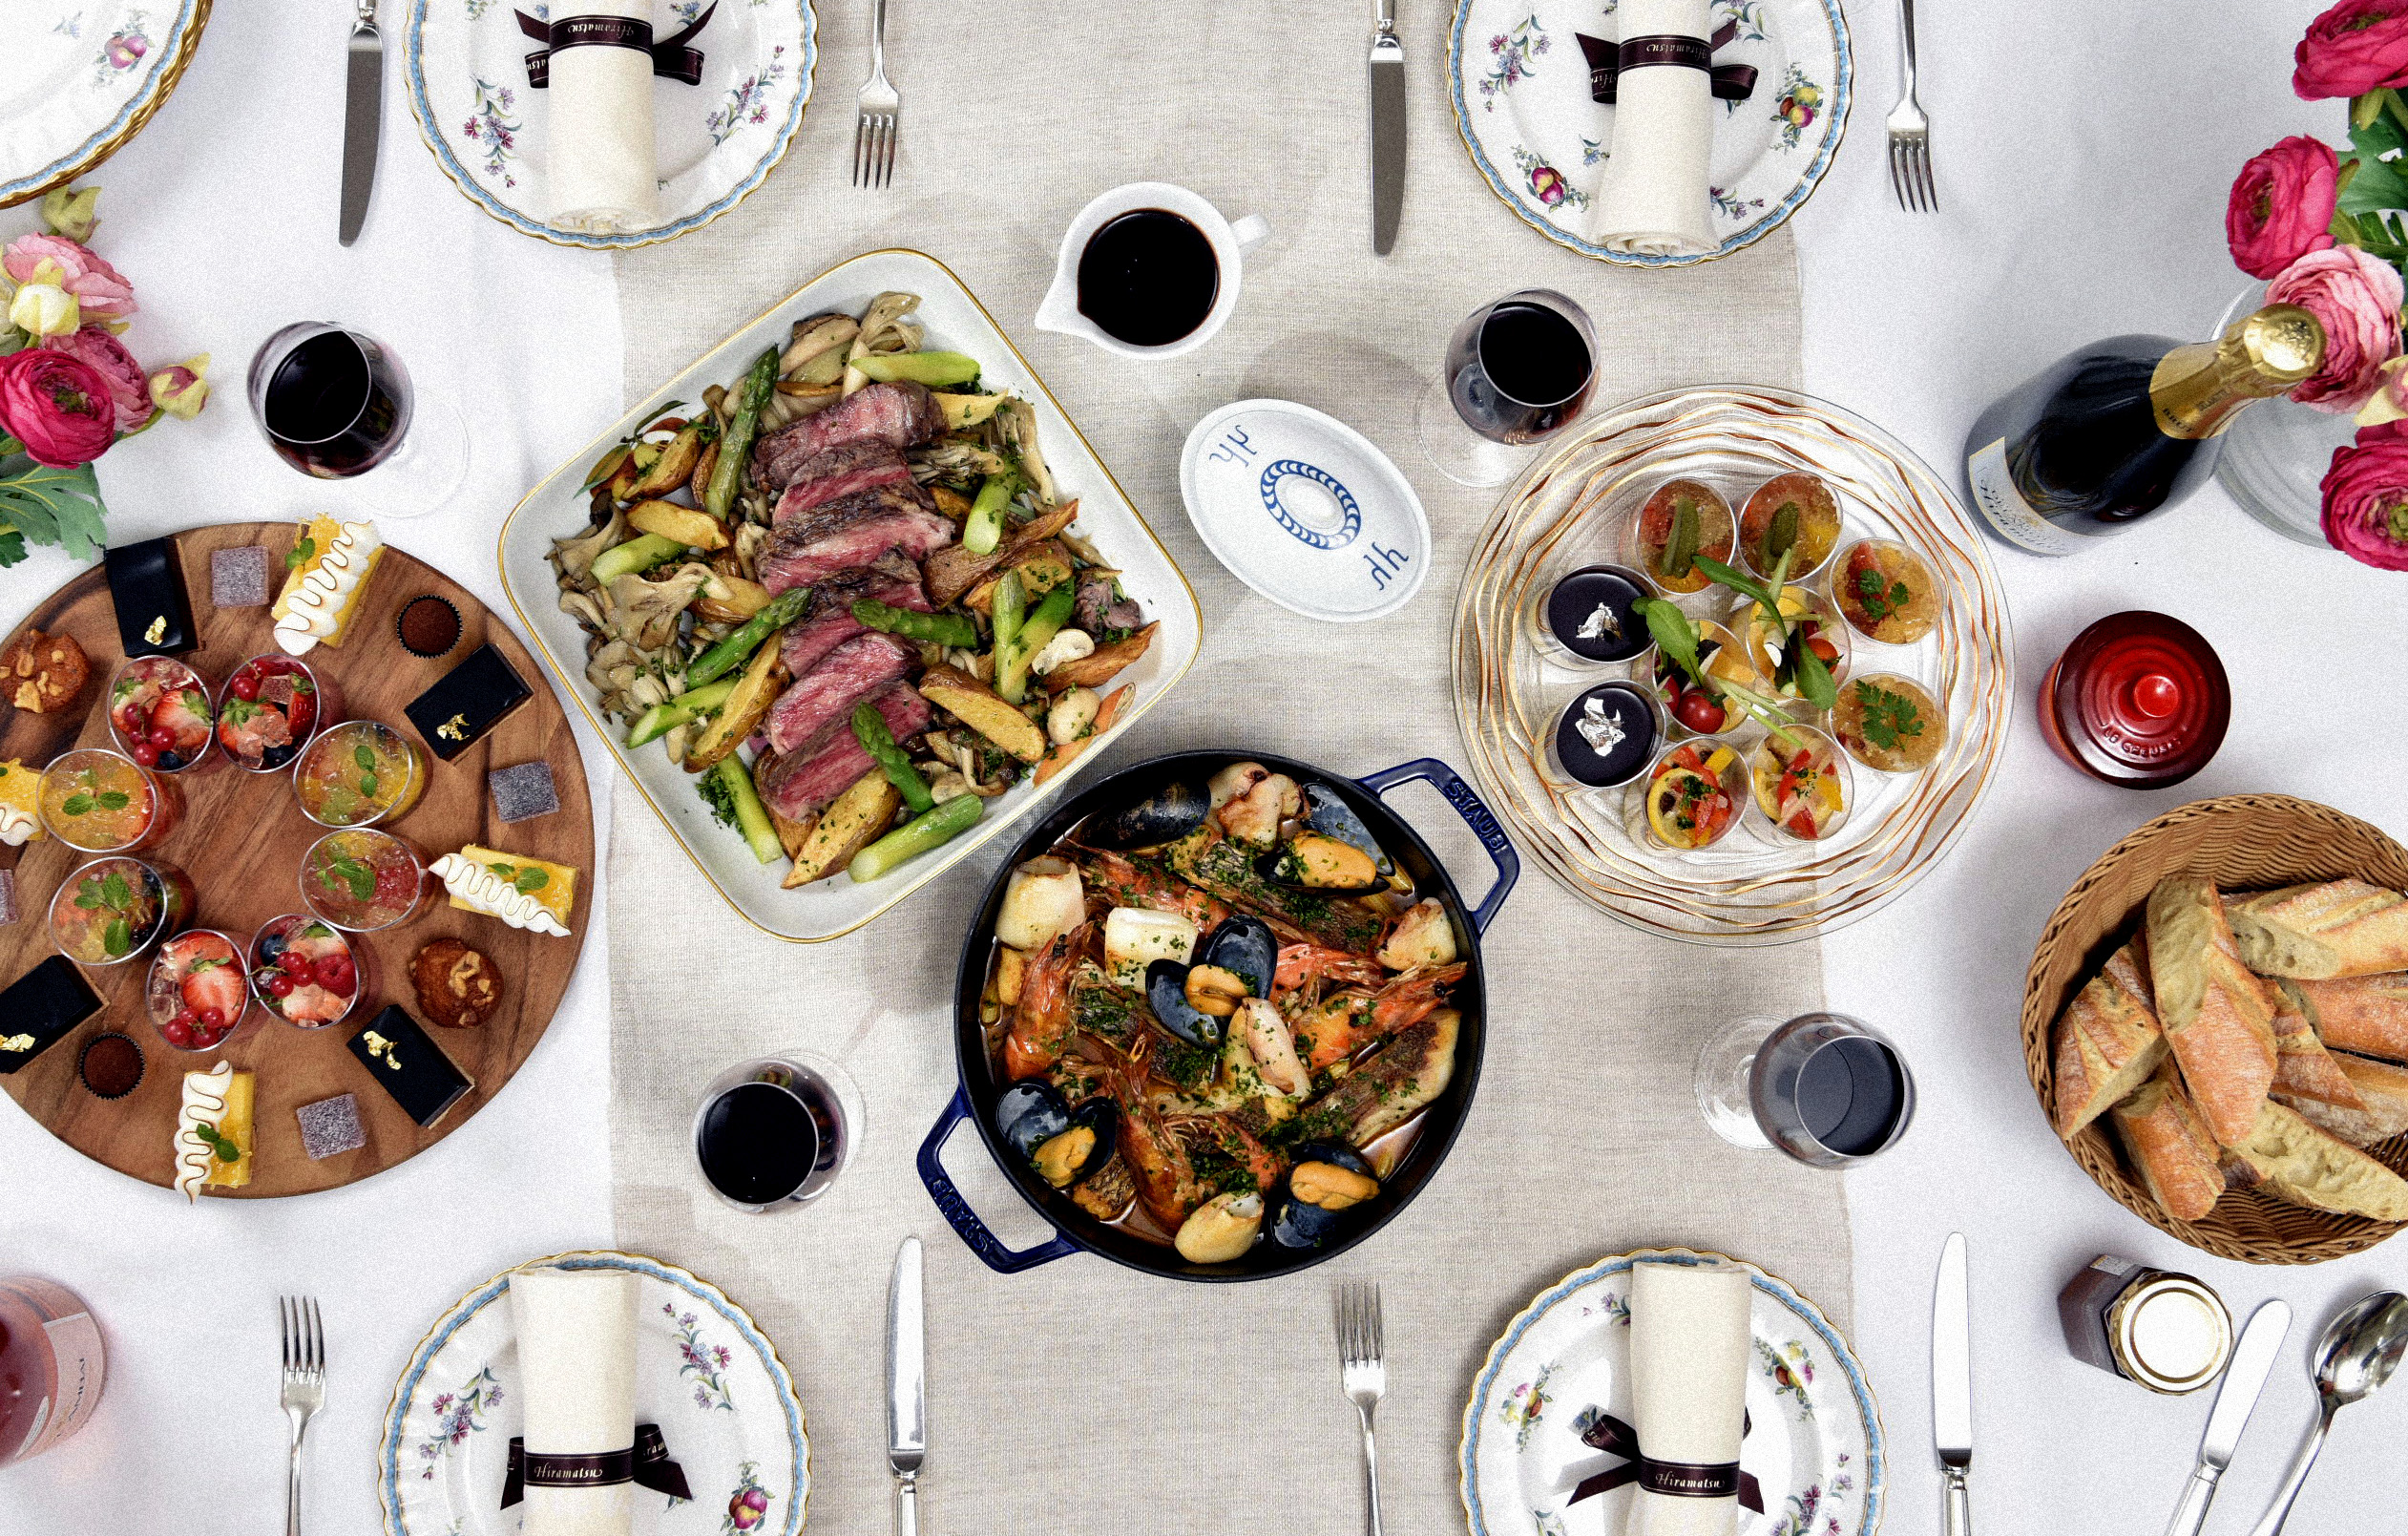 Hiramatsu To Go レストランの味をご自宅で 西麻布のフランス料理店 レストランひらまつ レゼルヴ のテイクアウトメニューを公開 Newscast